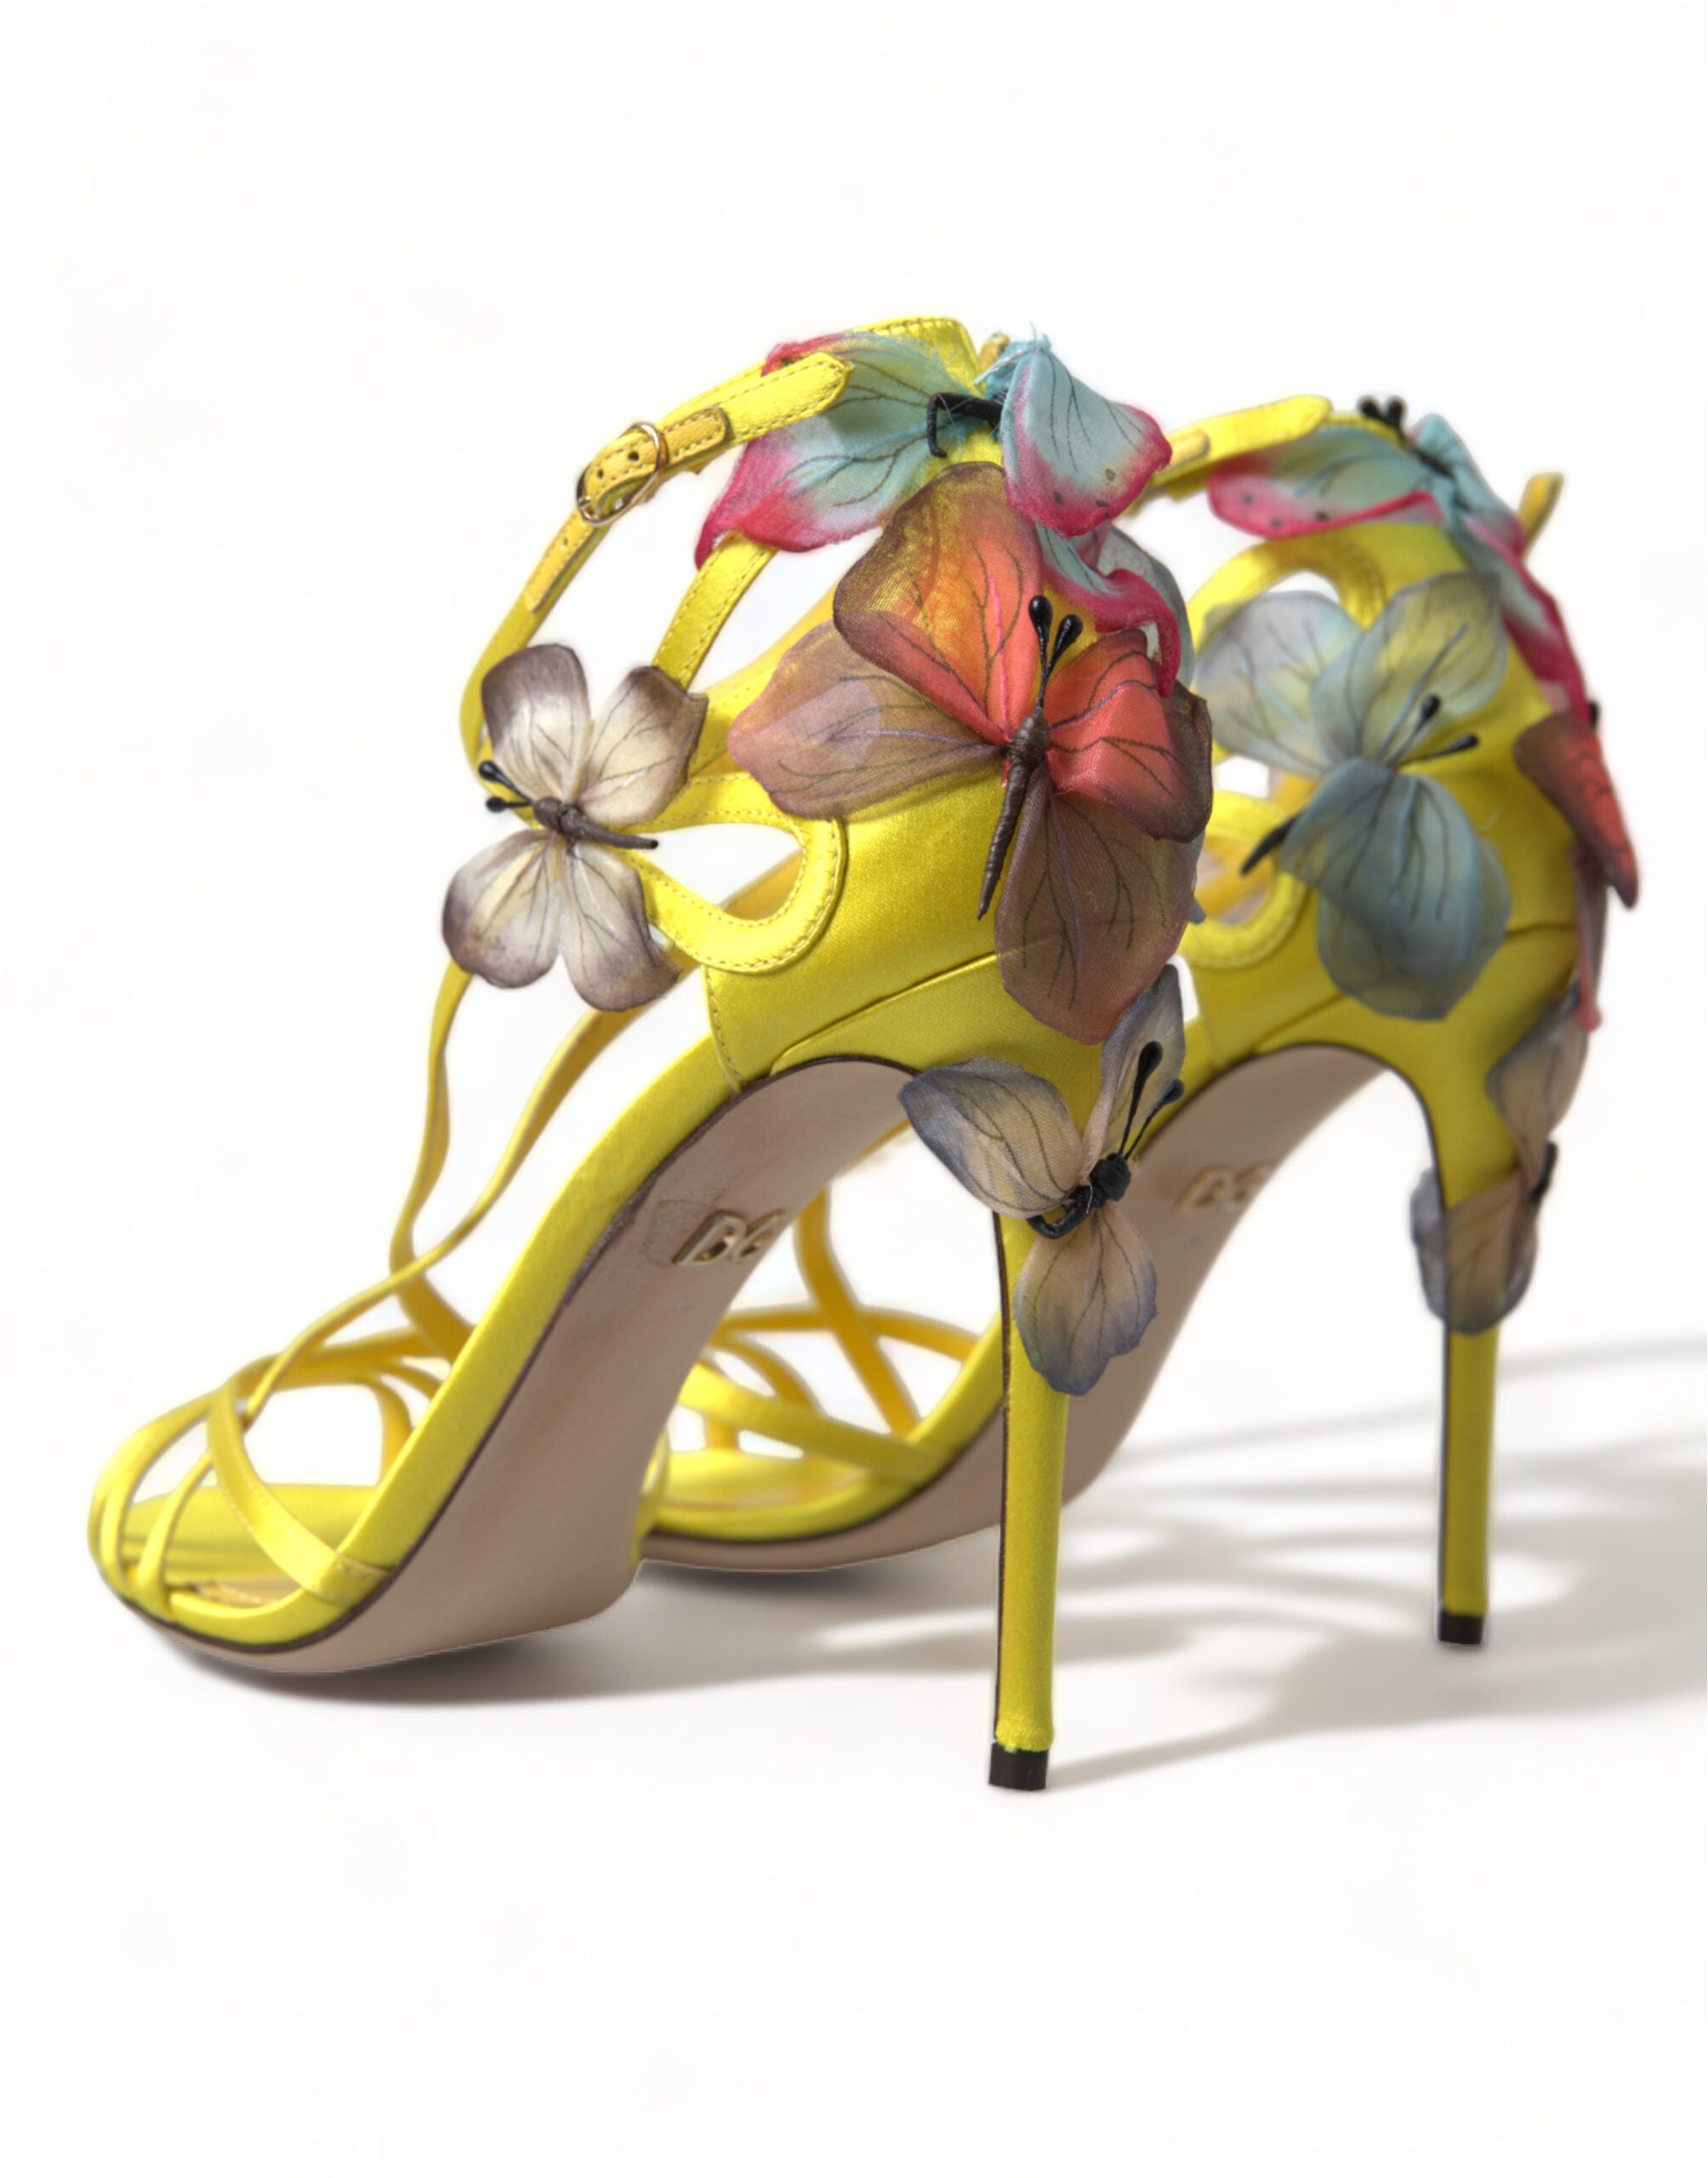 Dolce & Gabbana Chic Satin Floral Heeled Sandals